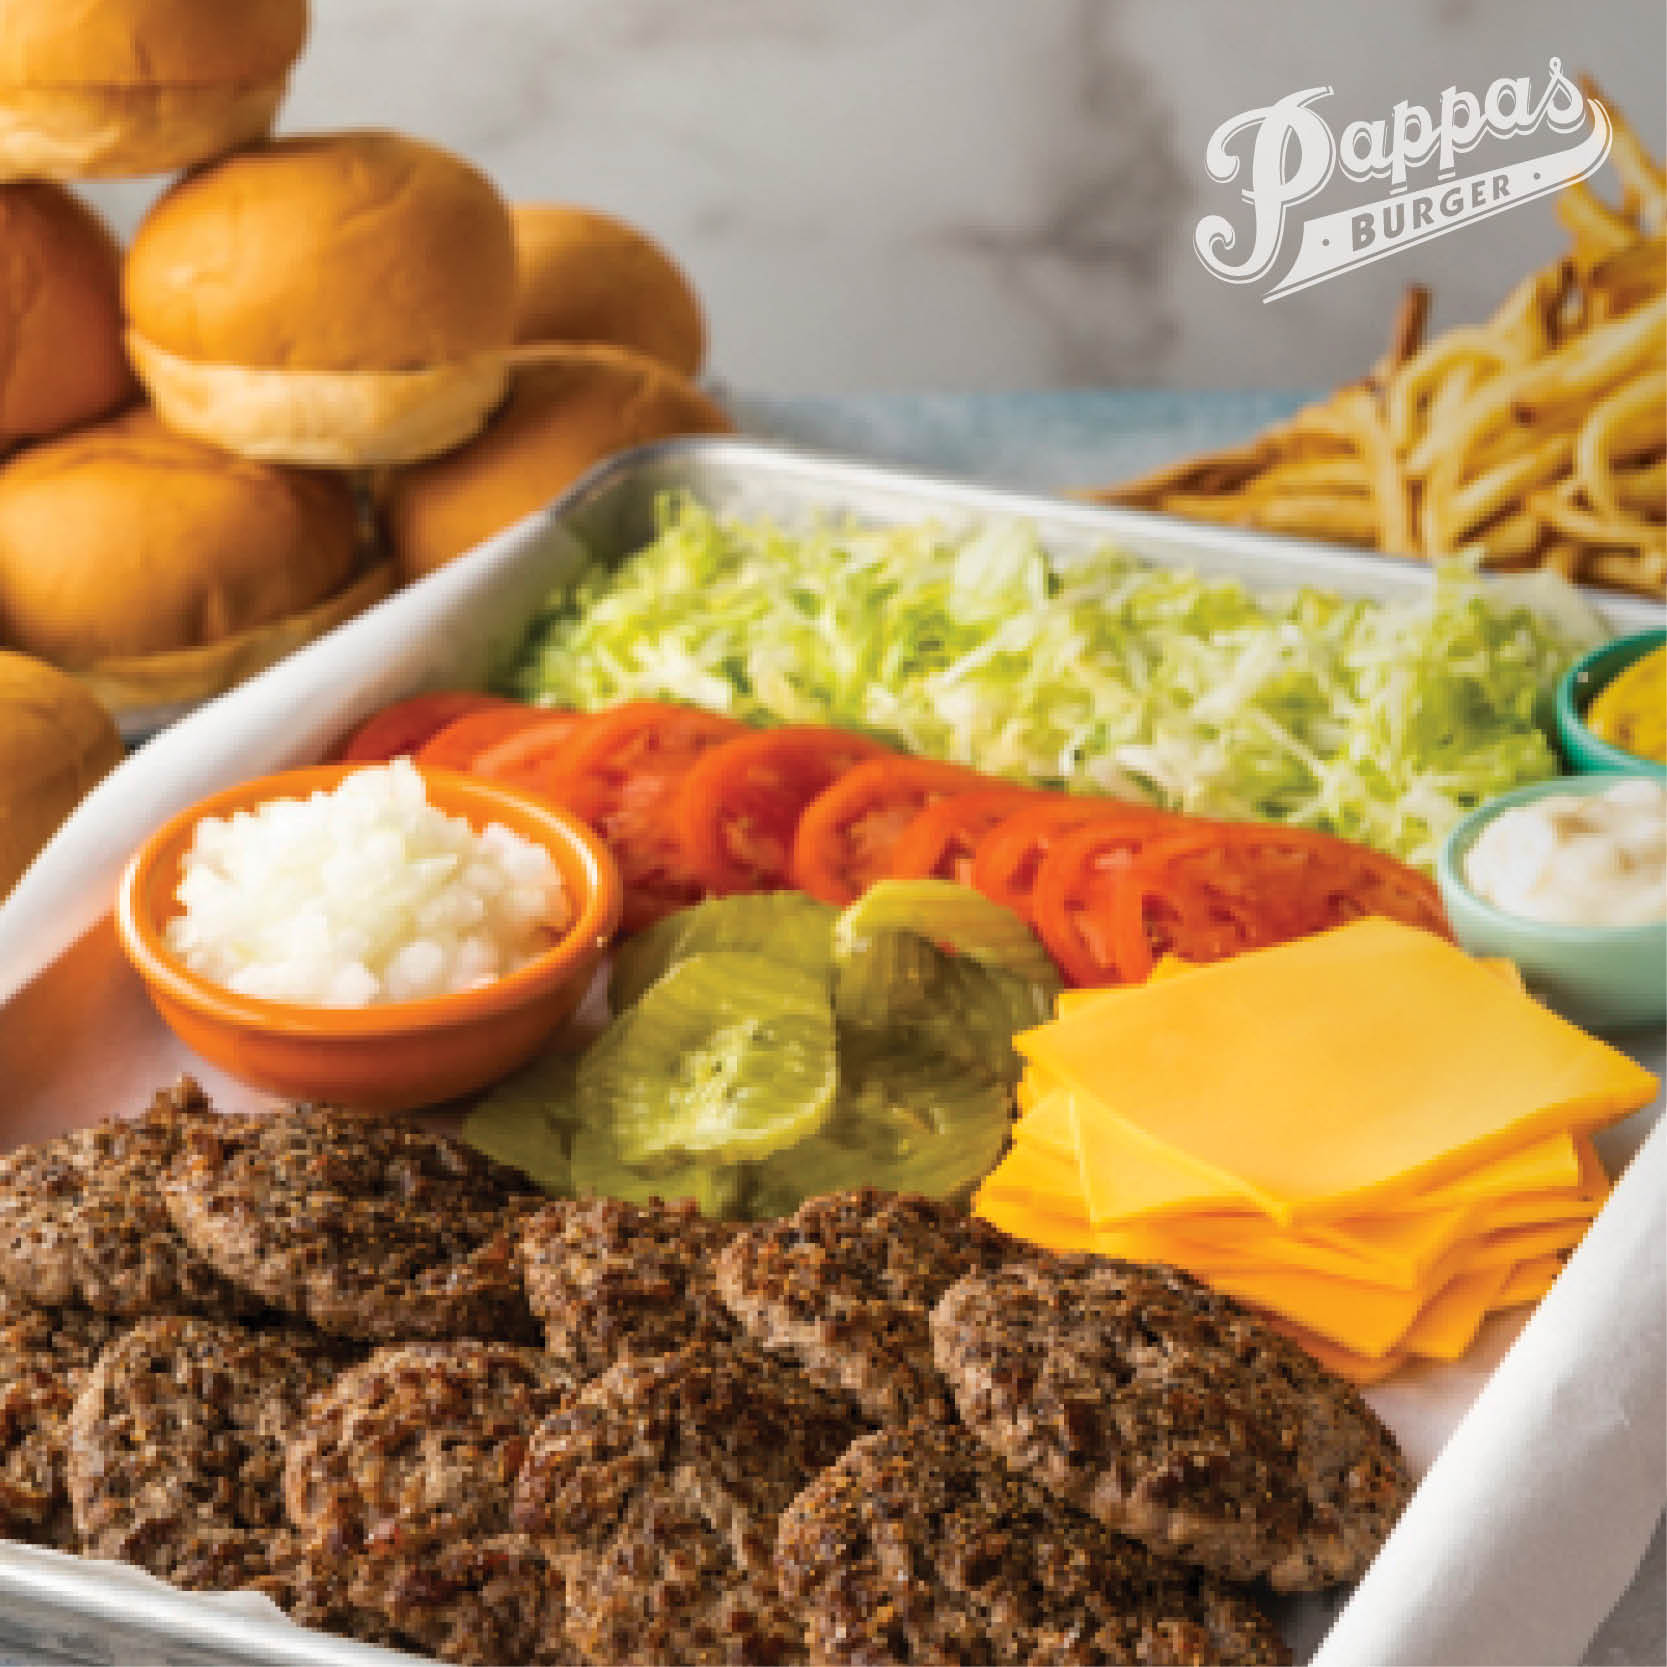 Pappas Burger, Restaurants